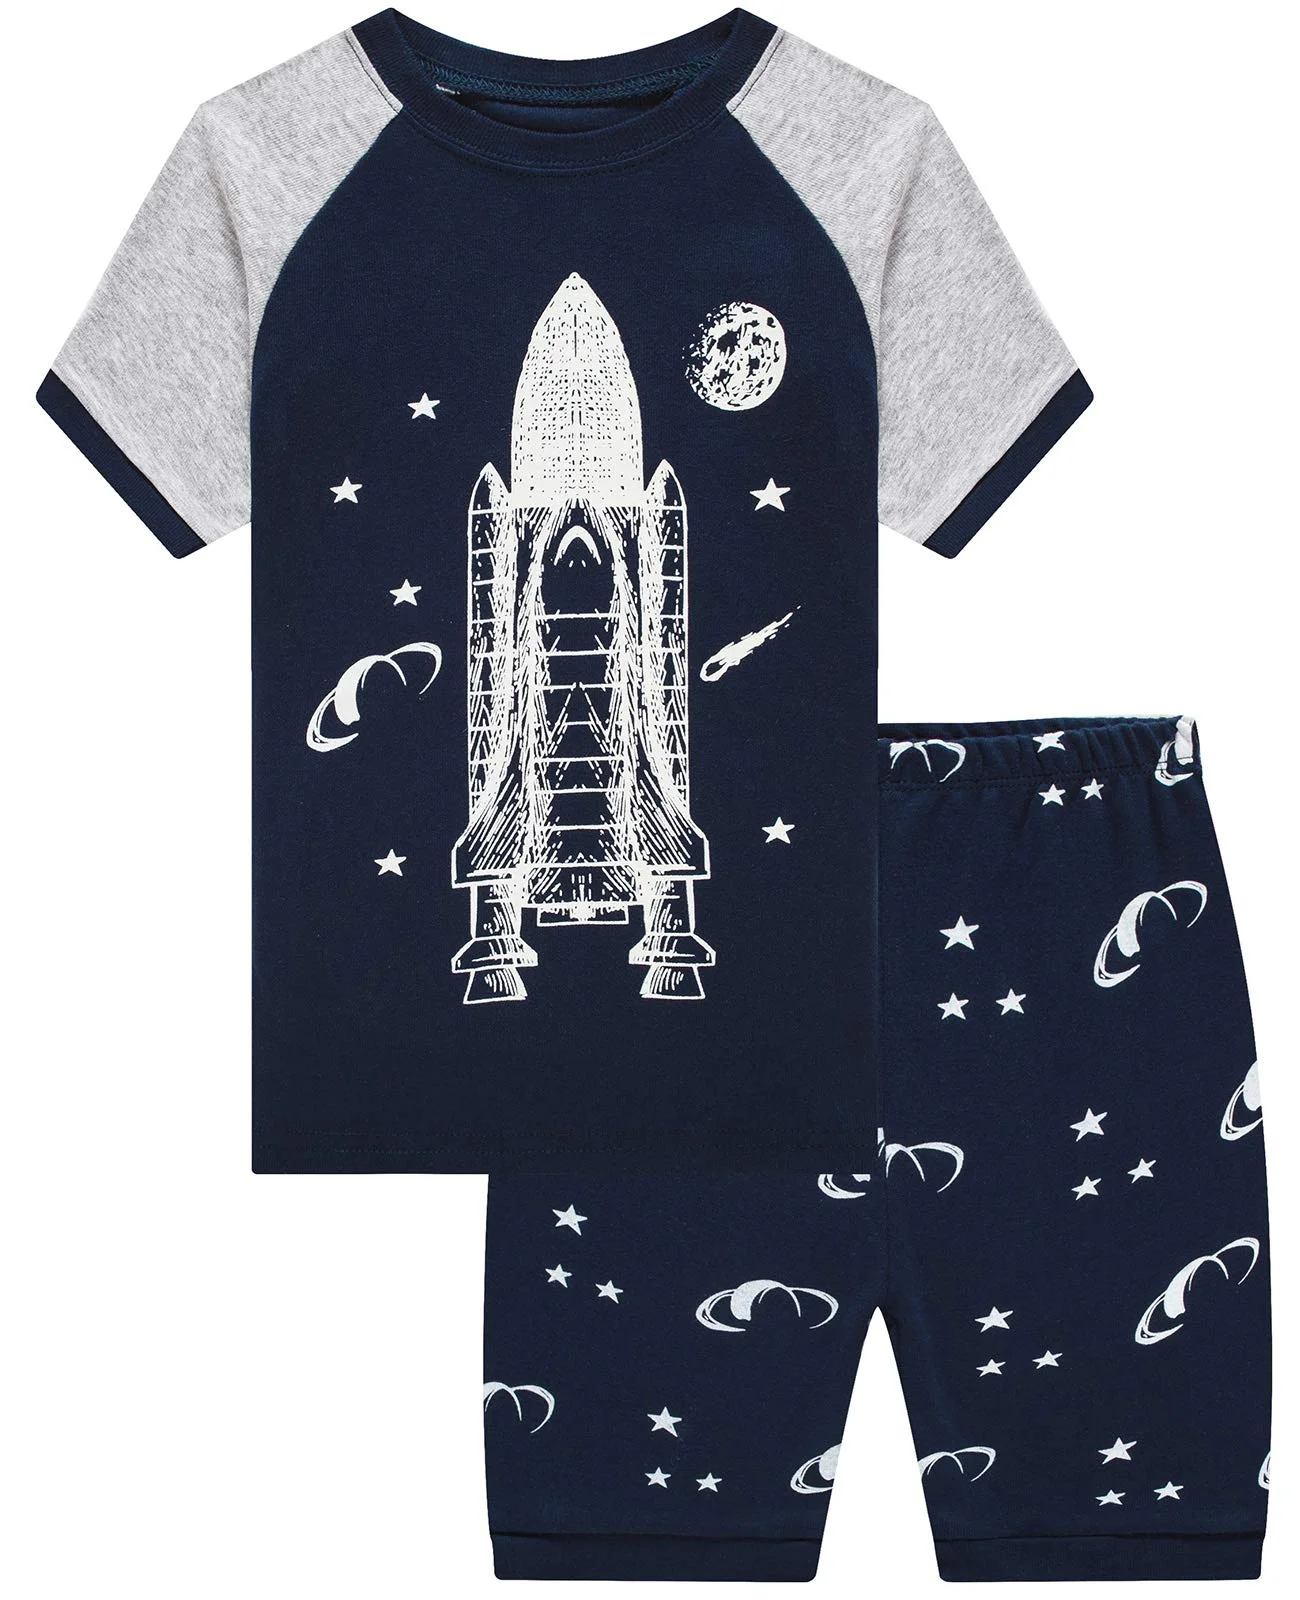 Boys Pajamas Cotton Summer Short Set Toddler Clothes Kids Pjs Sleepwear Sets